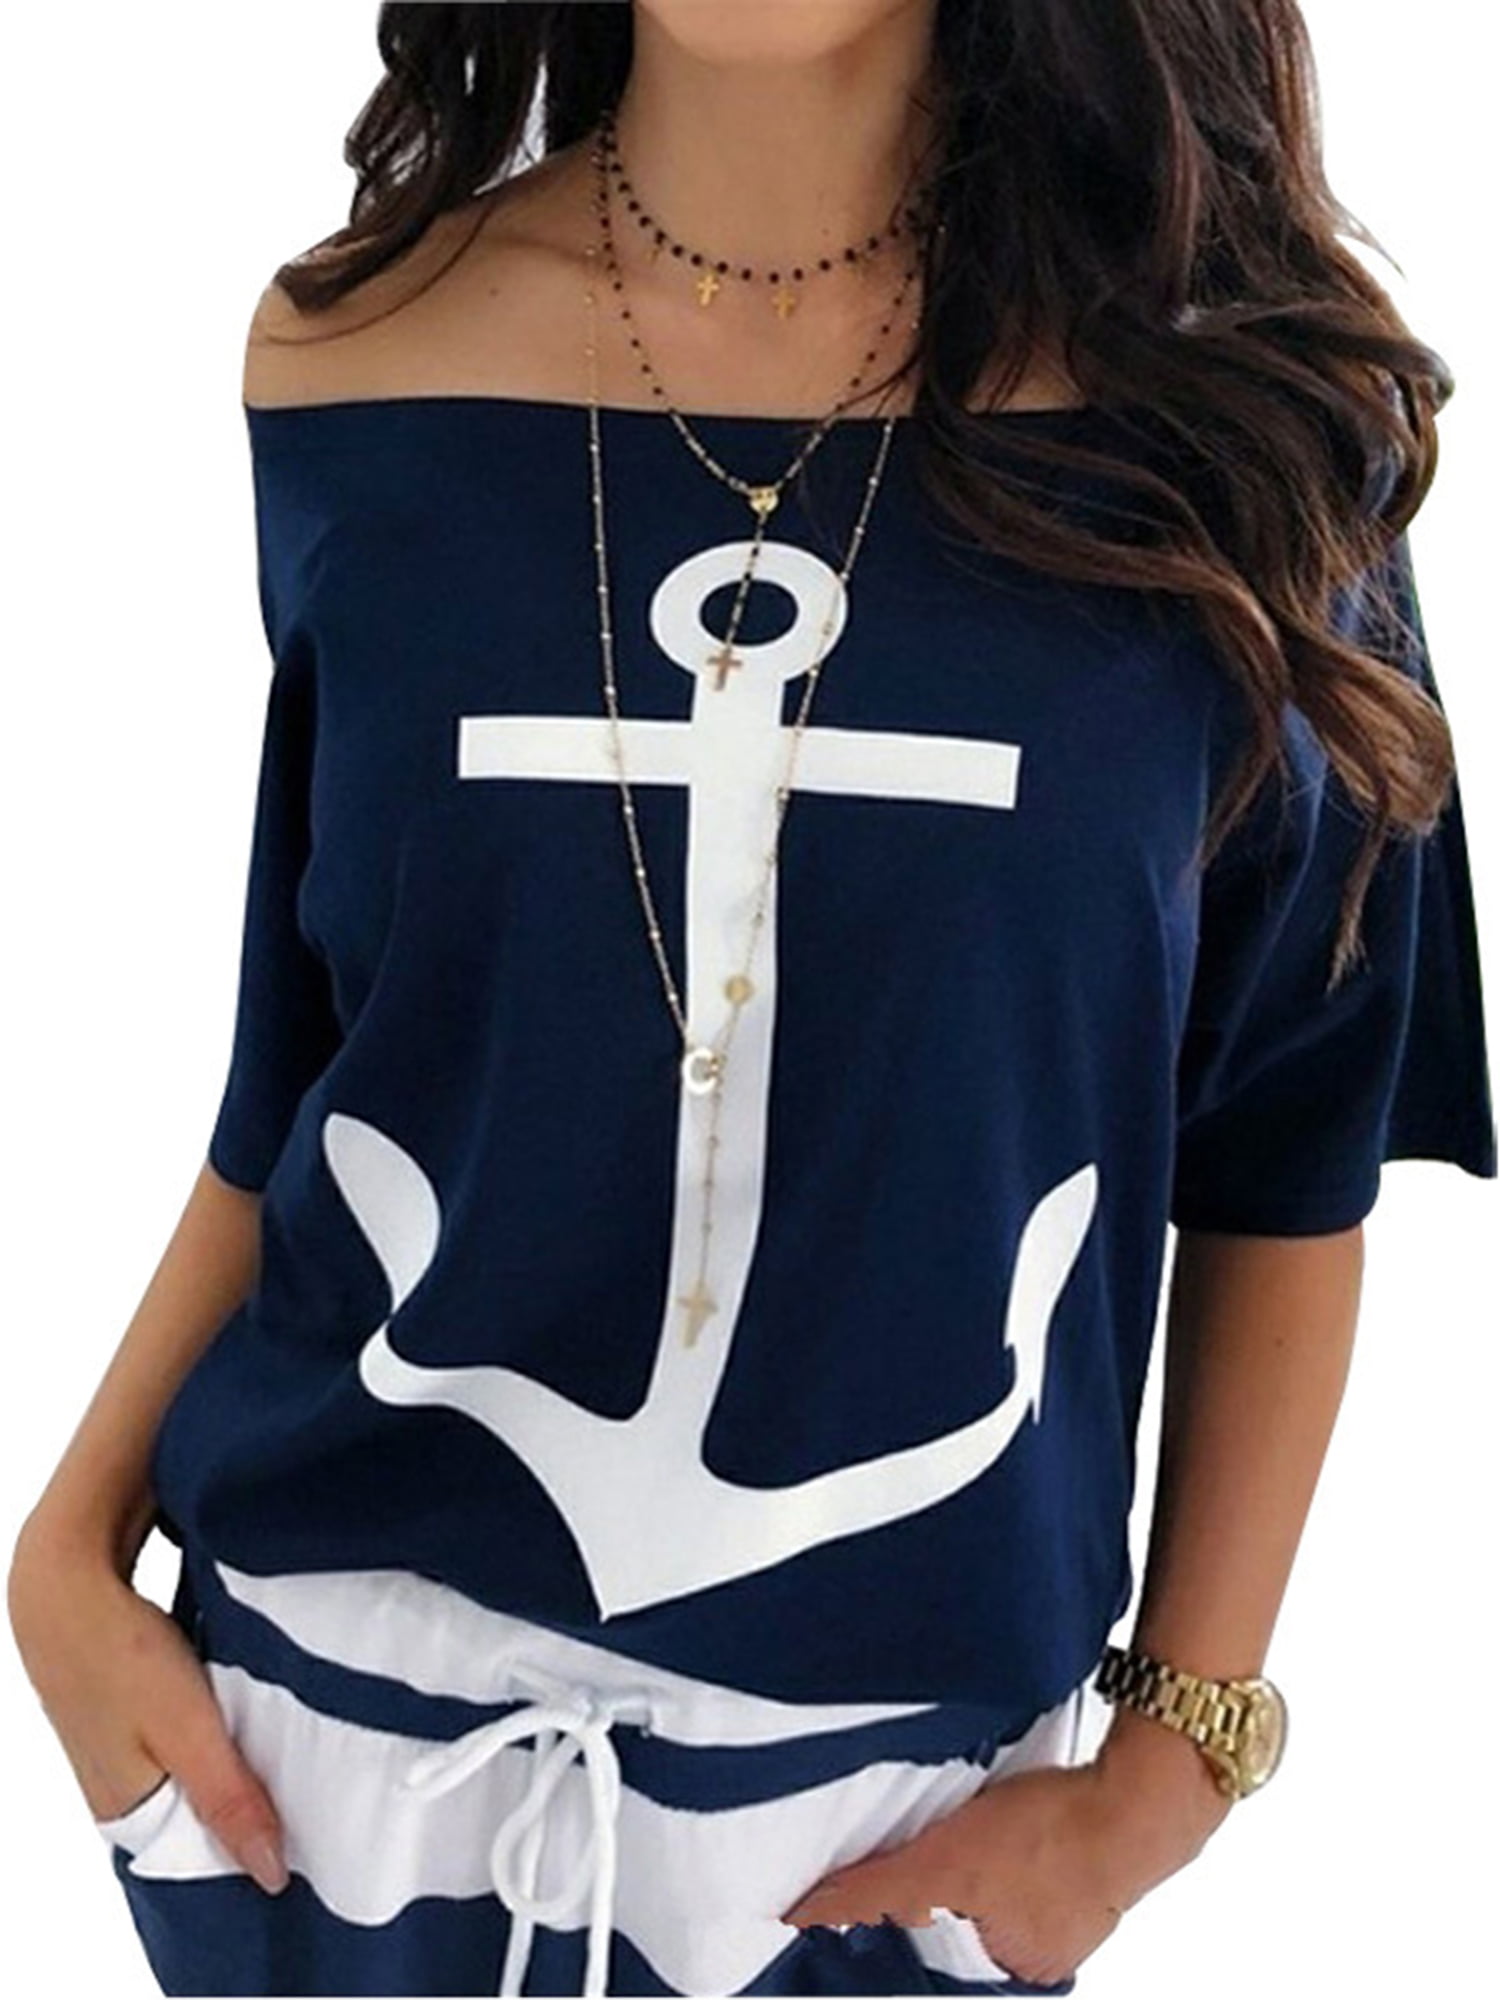 Yanekop Women Boat Anchor Print Sleeveless Bowknot Tank Tops Vest Blouse Shirts